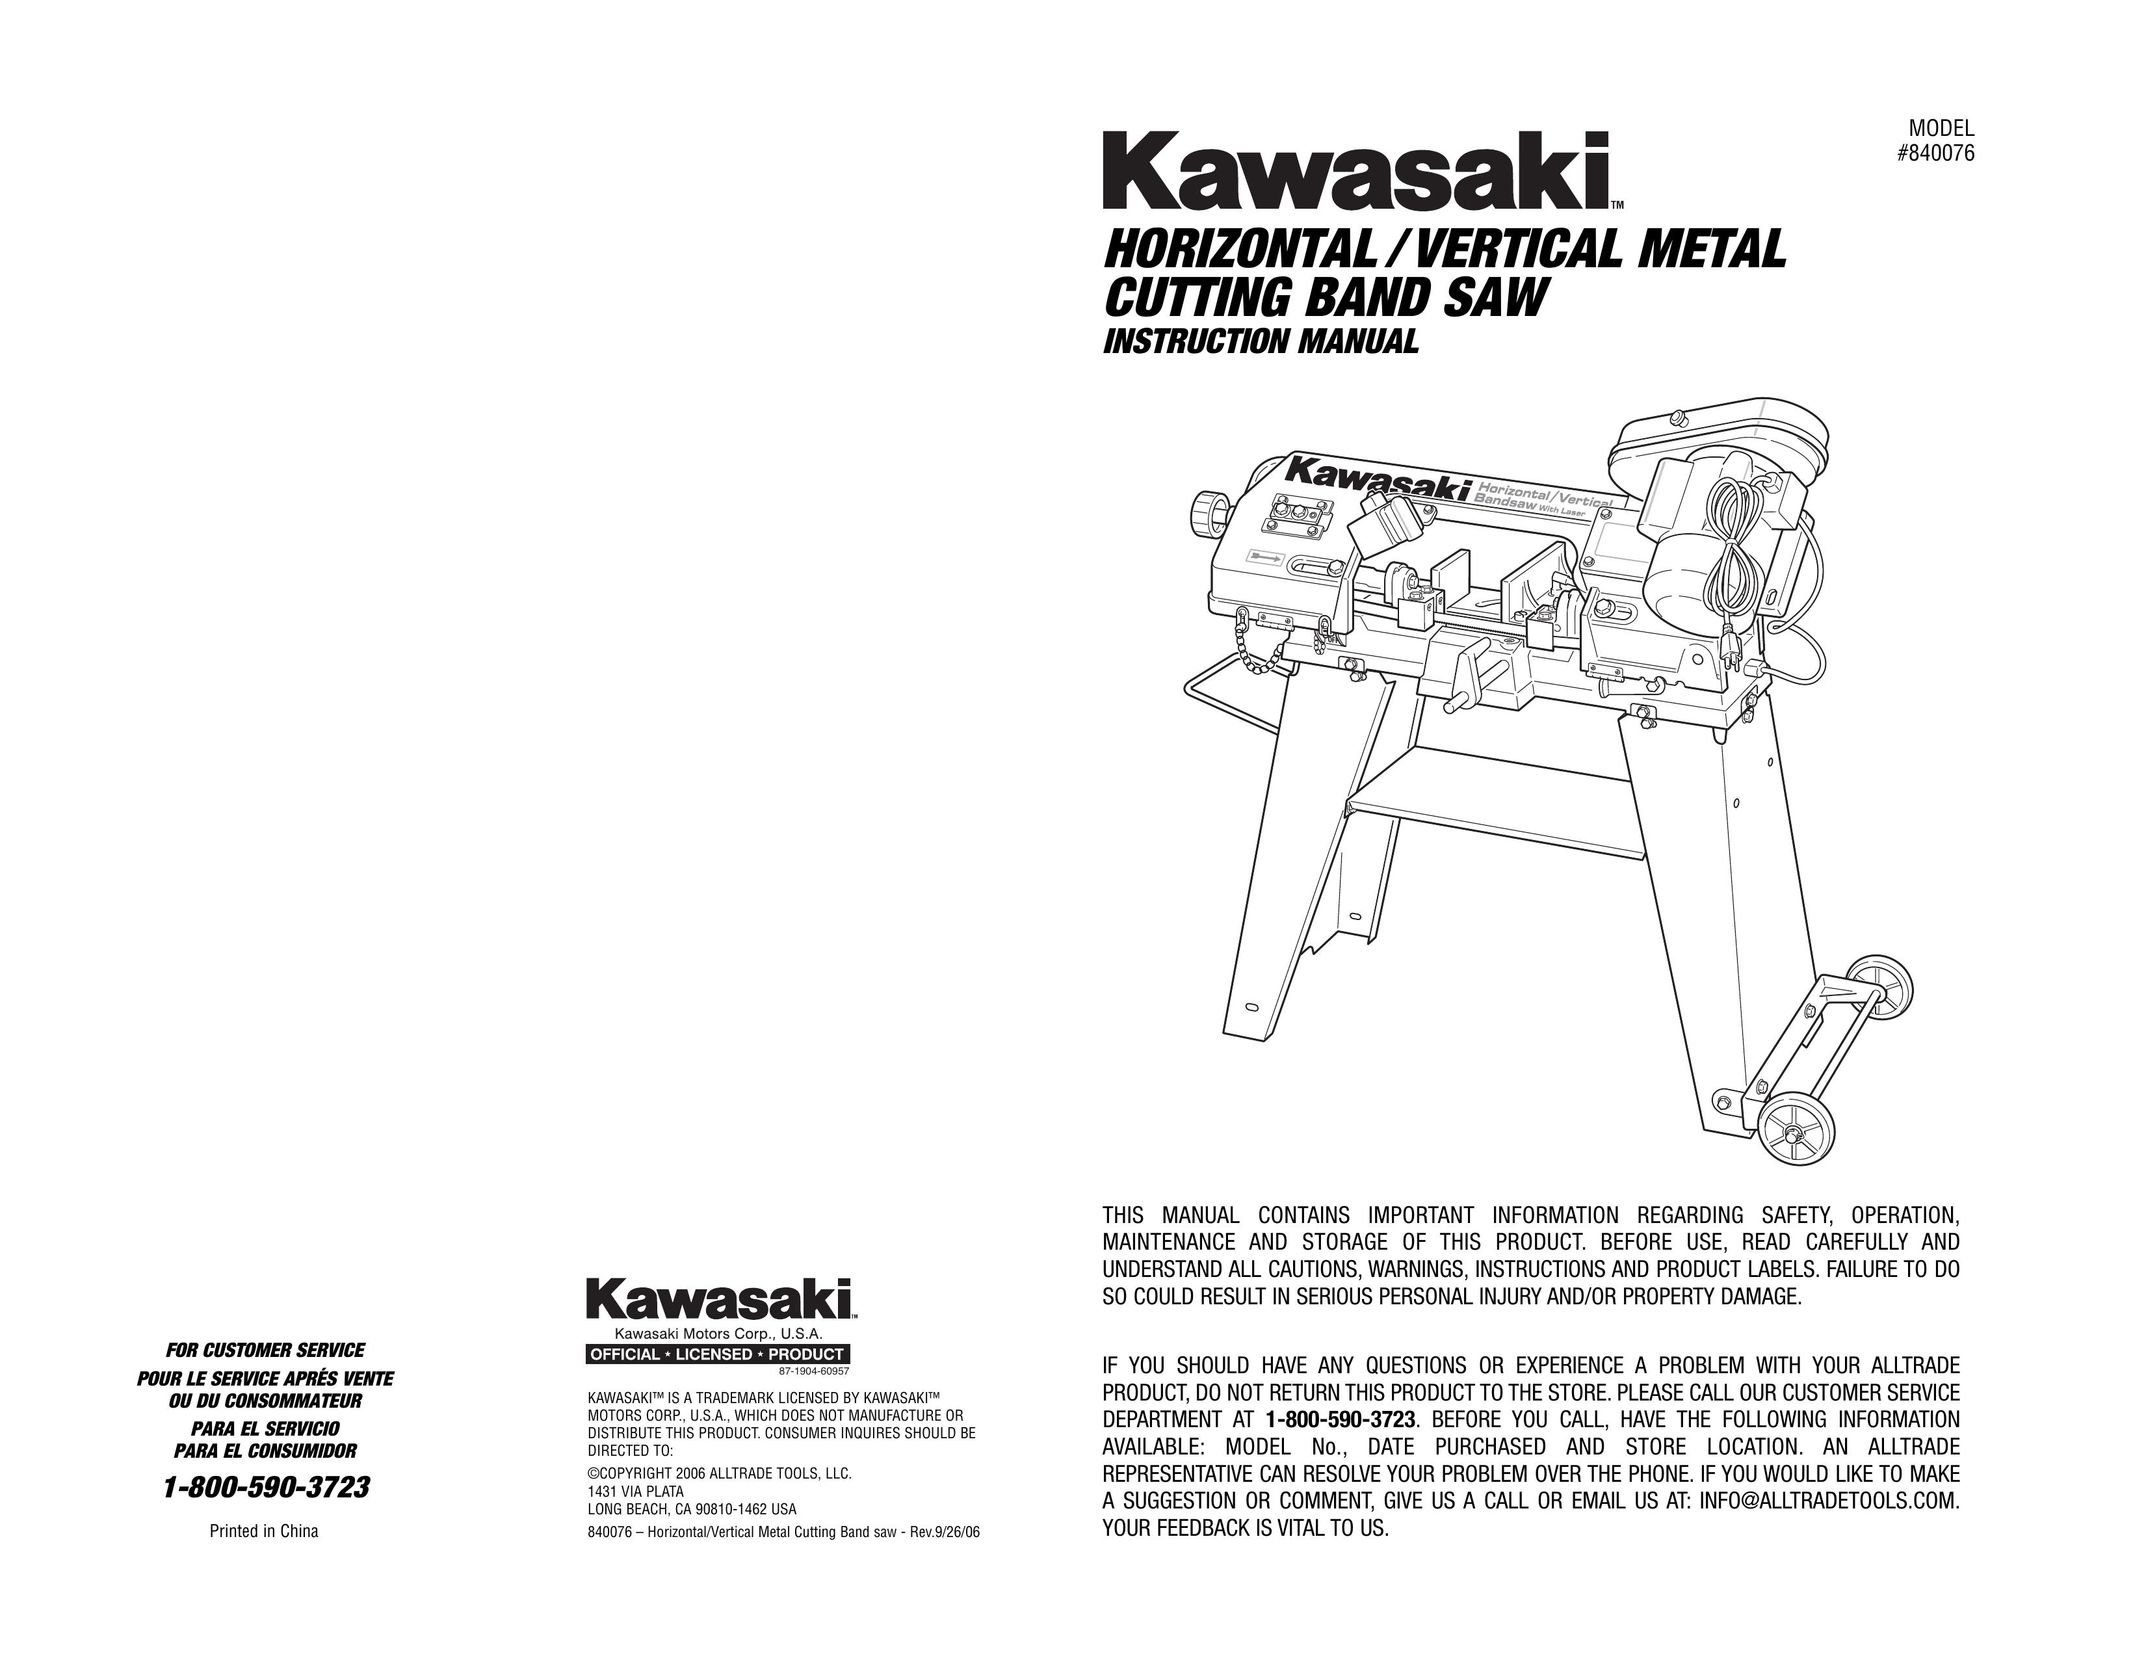 Kawasaki 840076 Saw User Manual